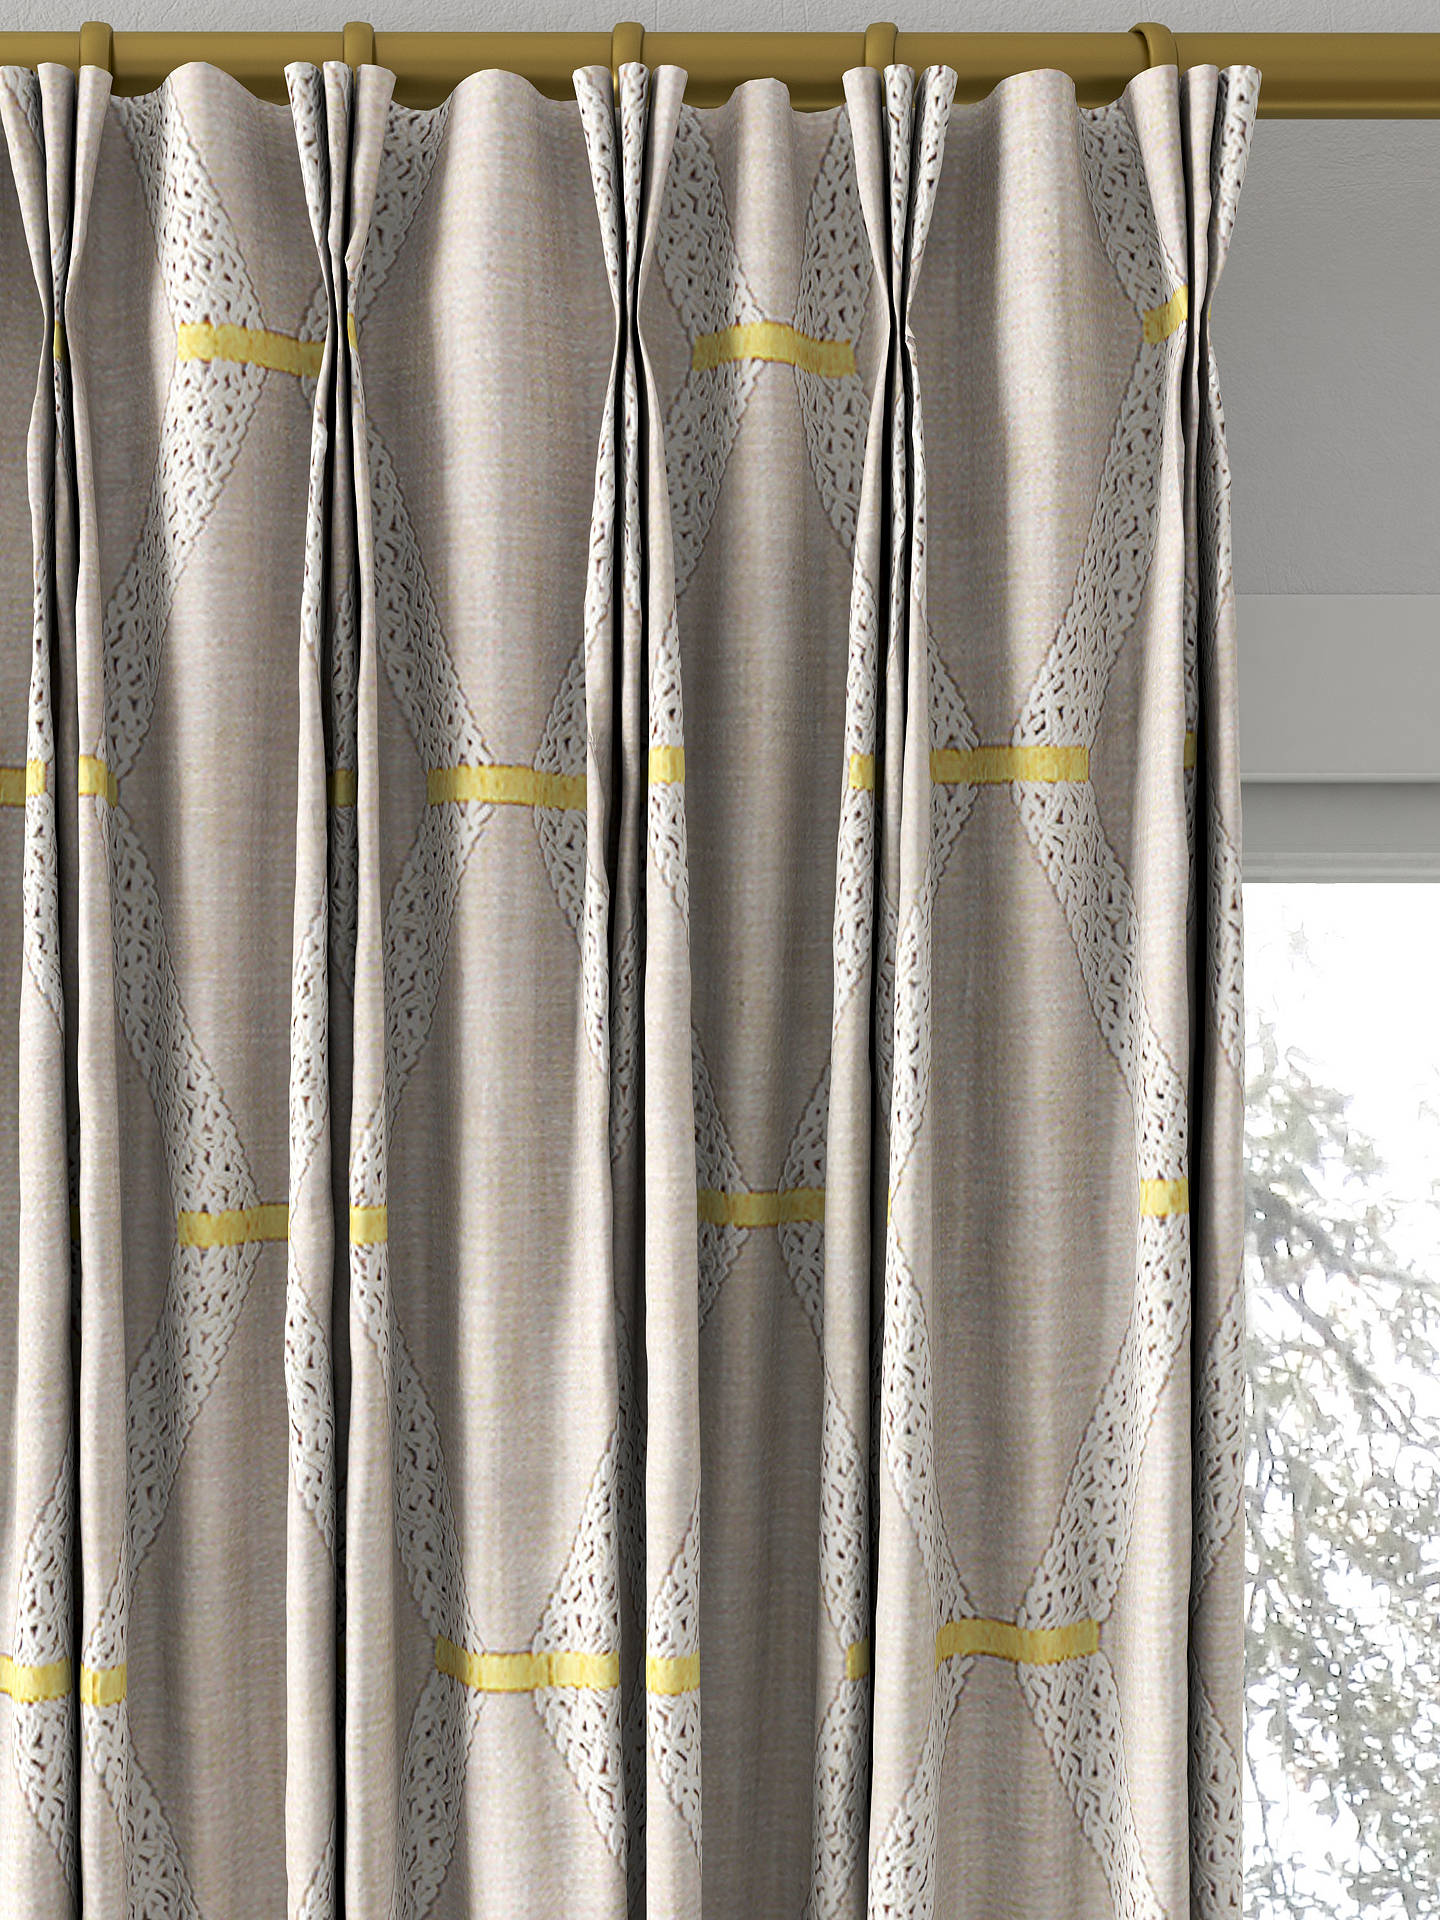 Sanderson Hemsby Made to Measure Curtains, Lichen